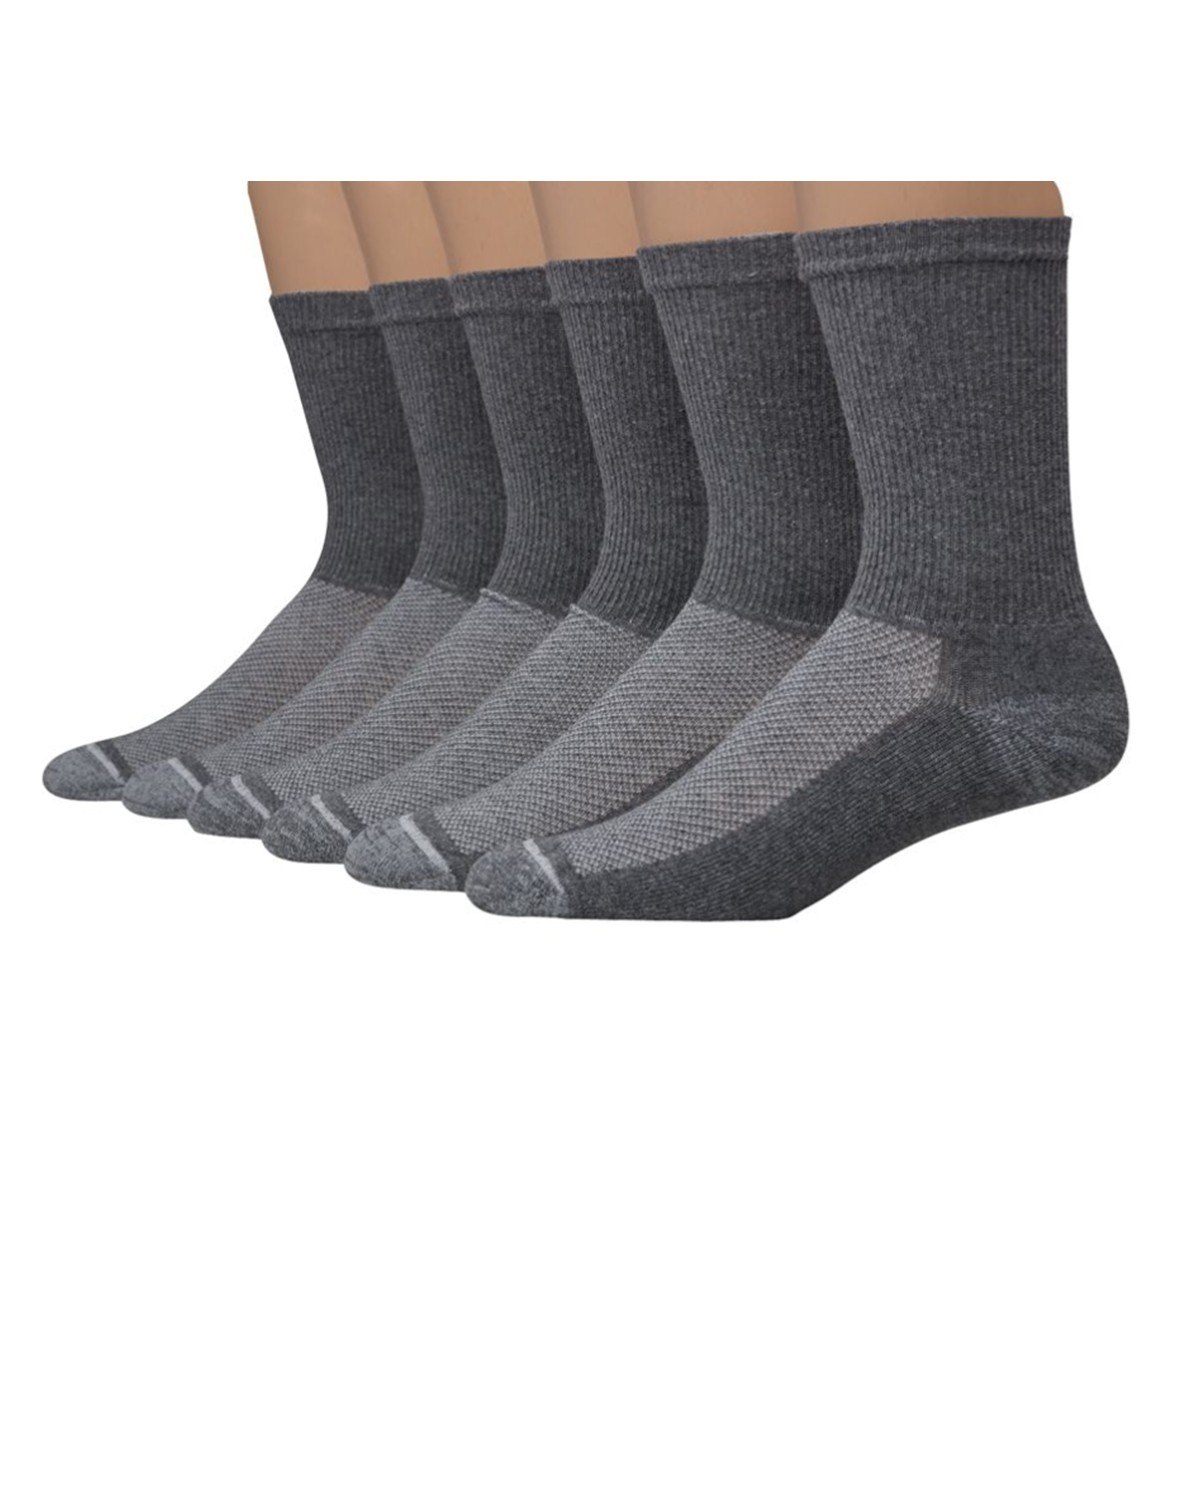 Hanes UL126 Ultimate Men's X-Temp FreshIQ Grey Crew Socks 6-Pack - Free ...